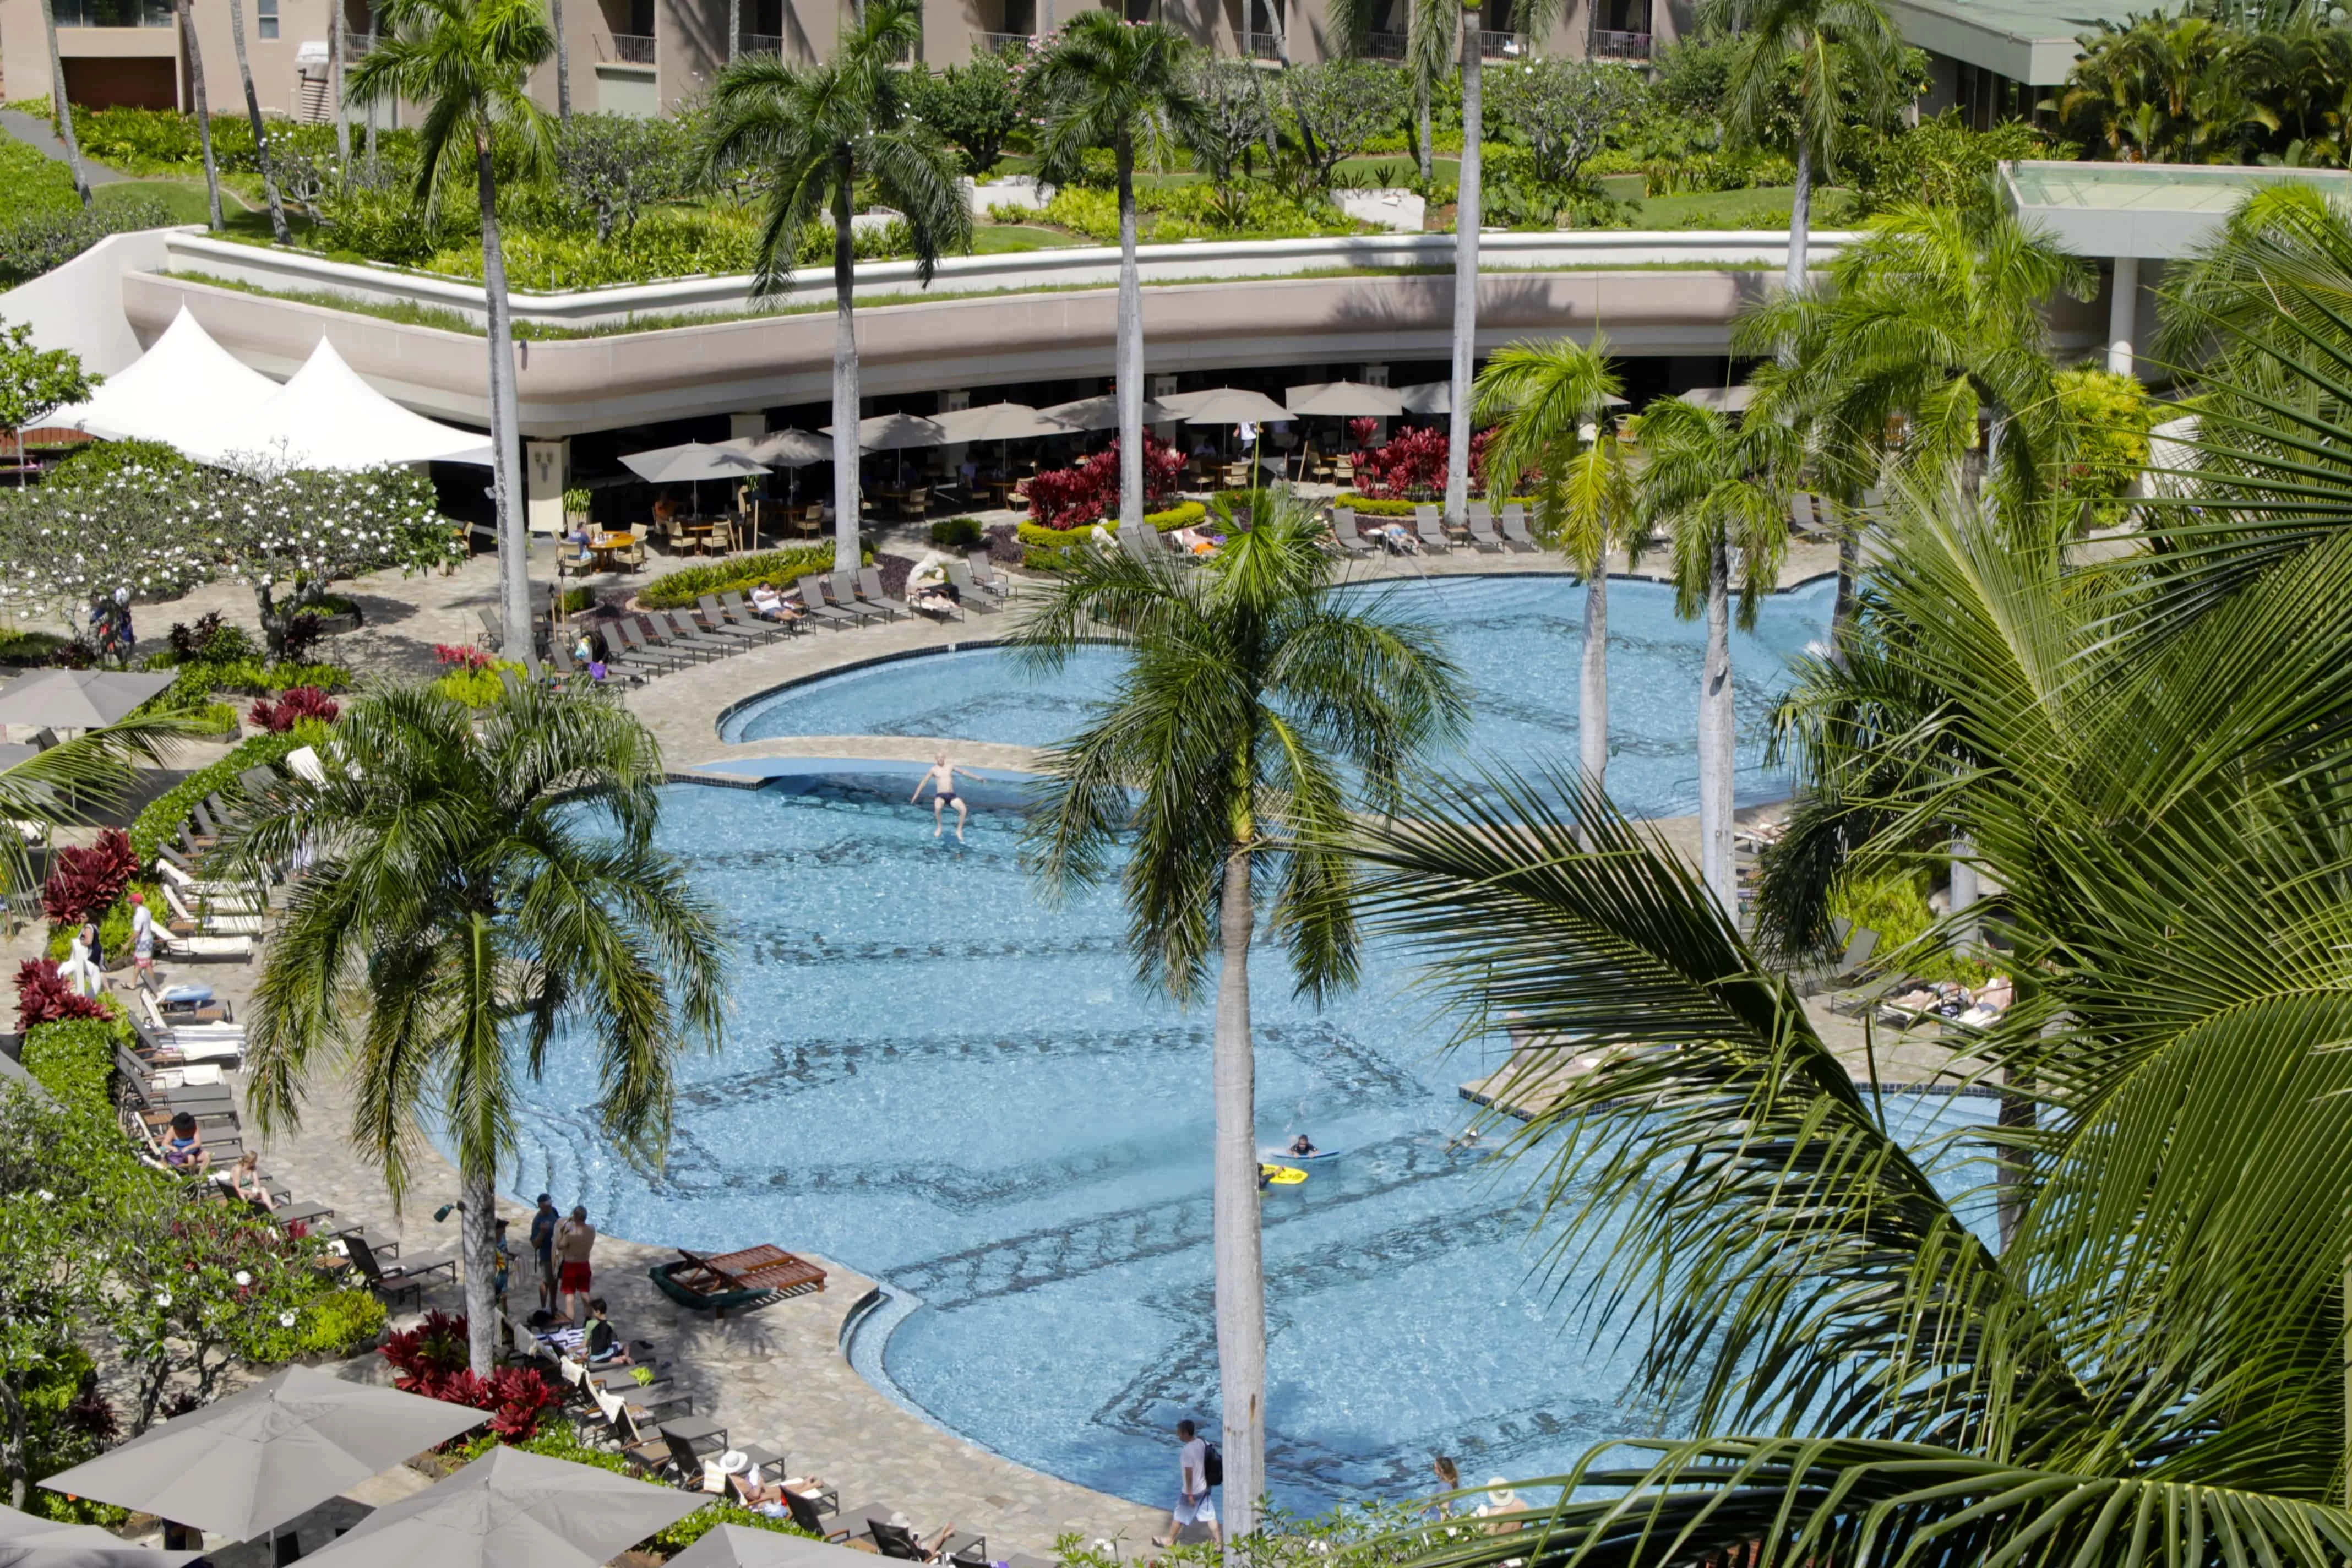 Kauai Day Seven - Pool Day at the Resort!